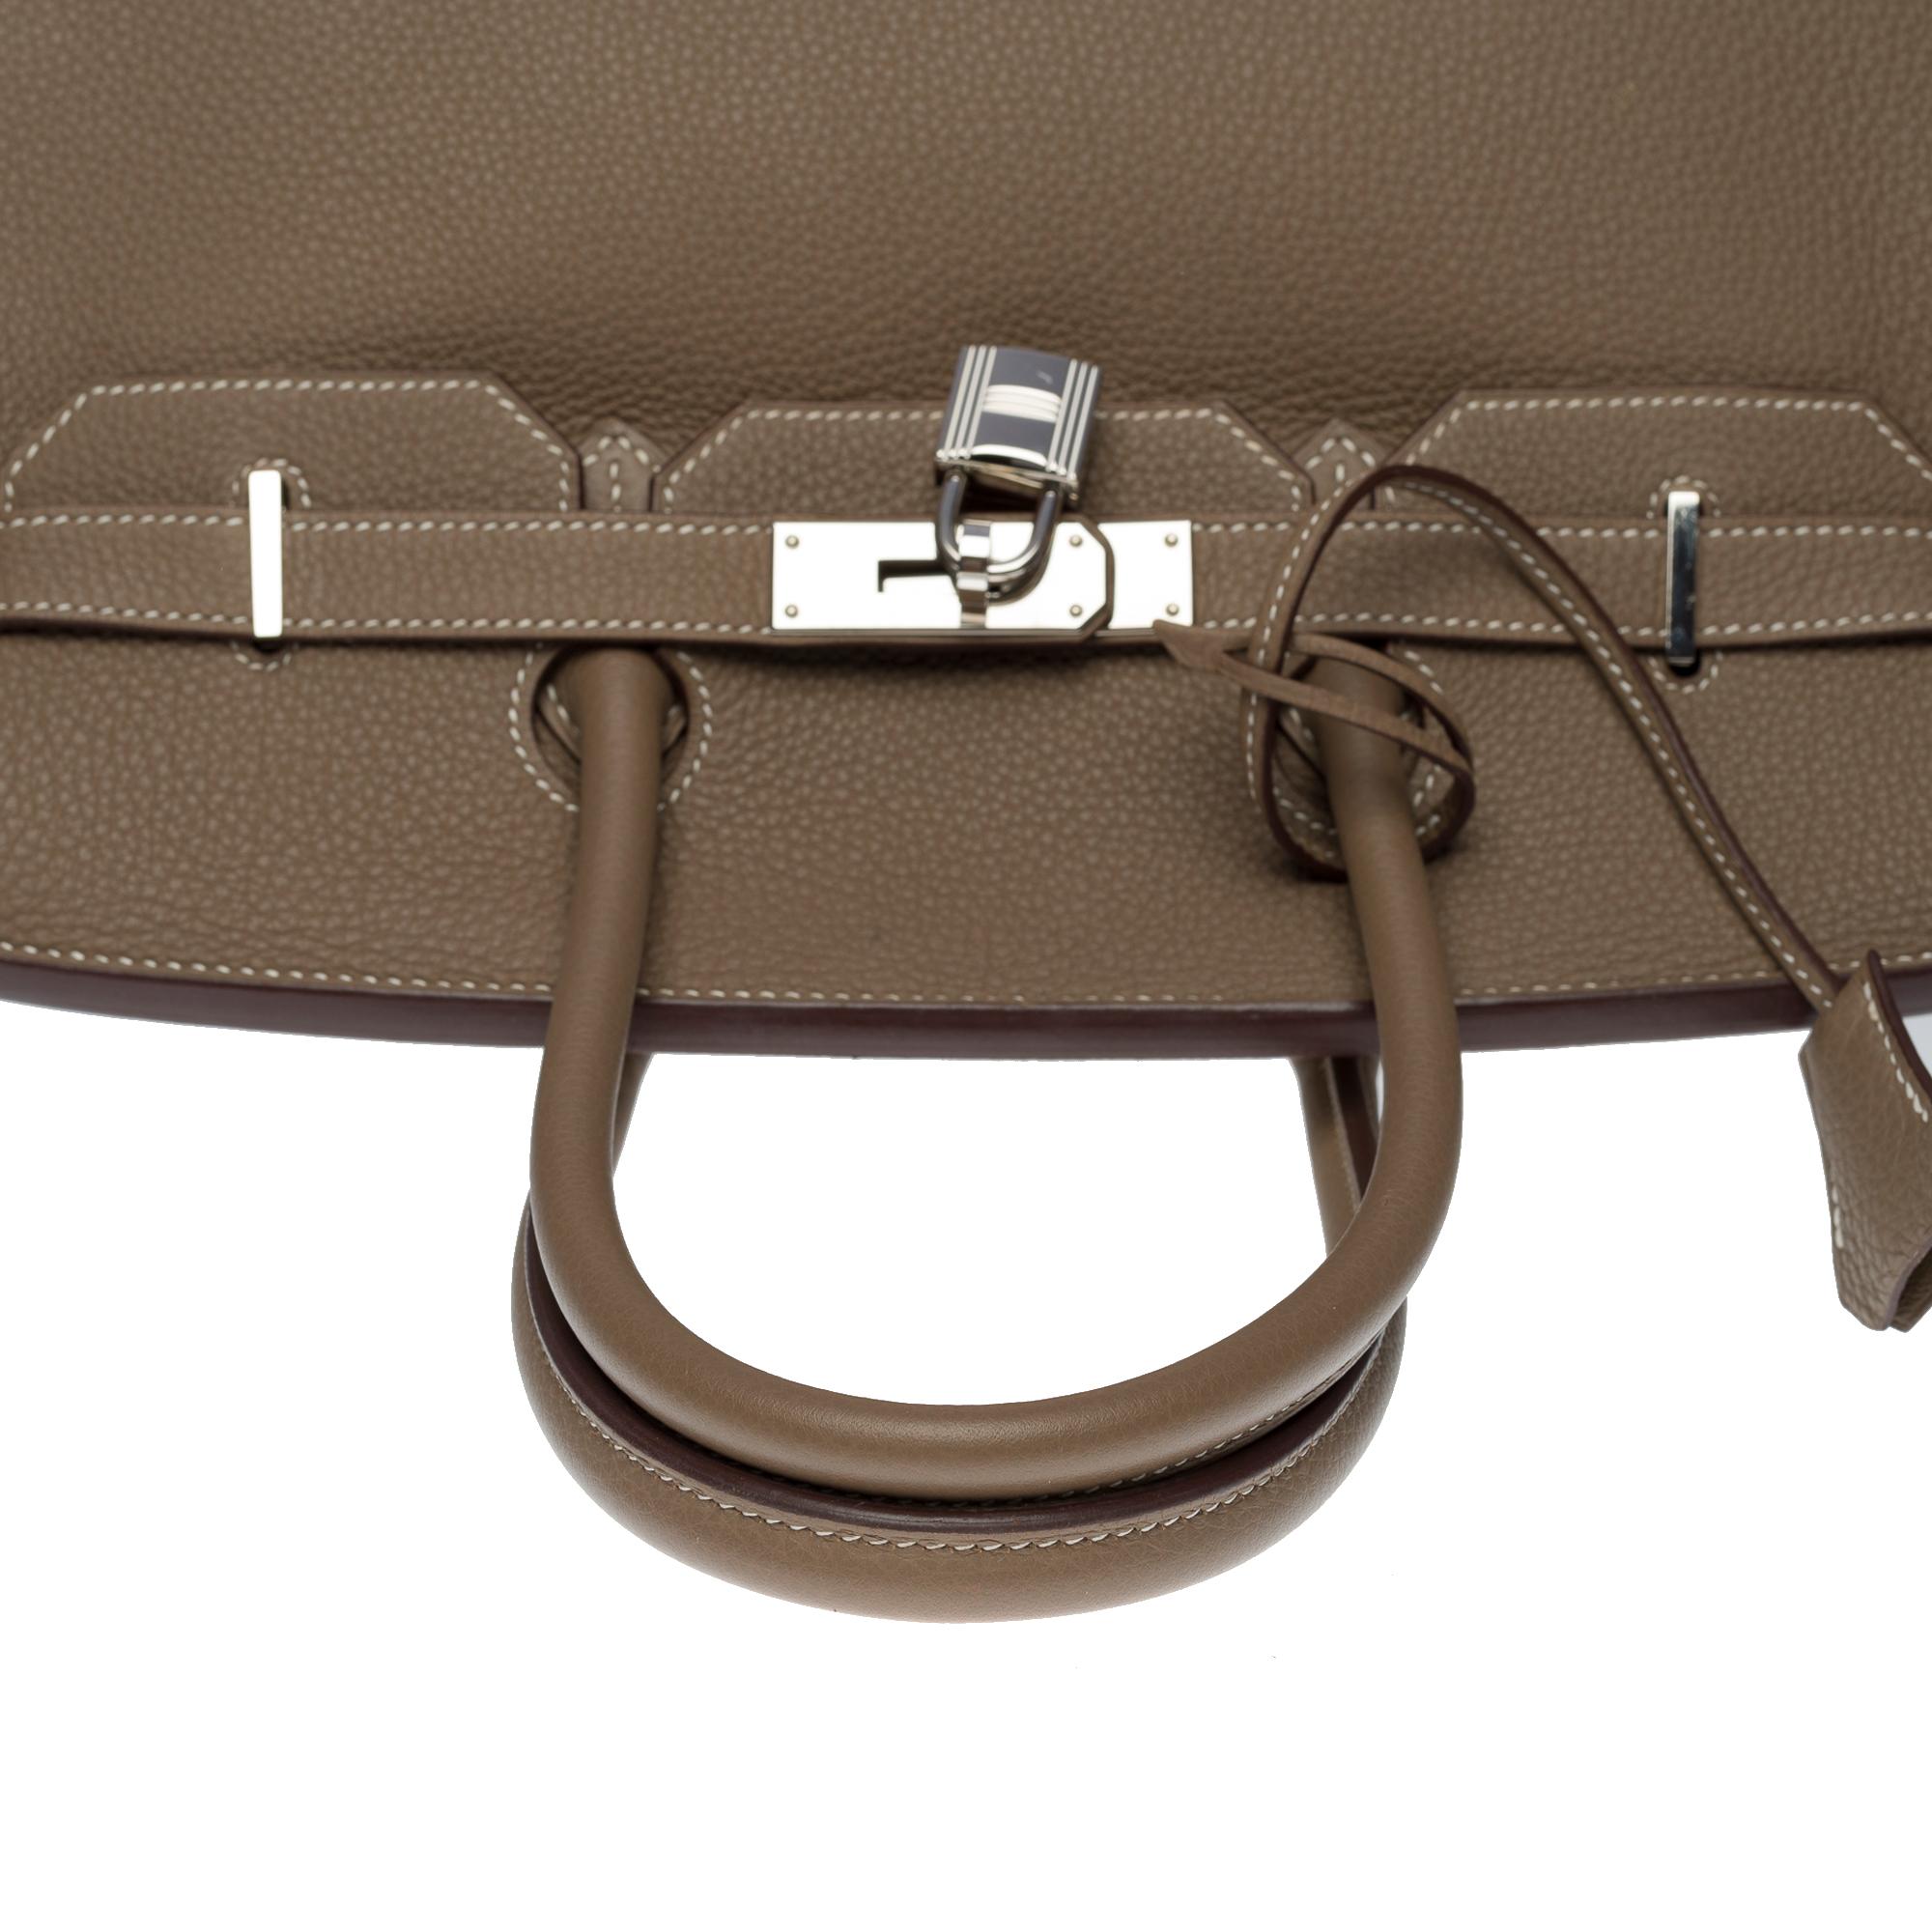 Stunning Hermès Birkin 35 handbag in étoupe Togo leather, SHW 1